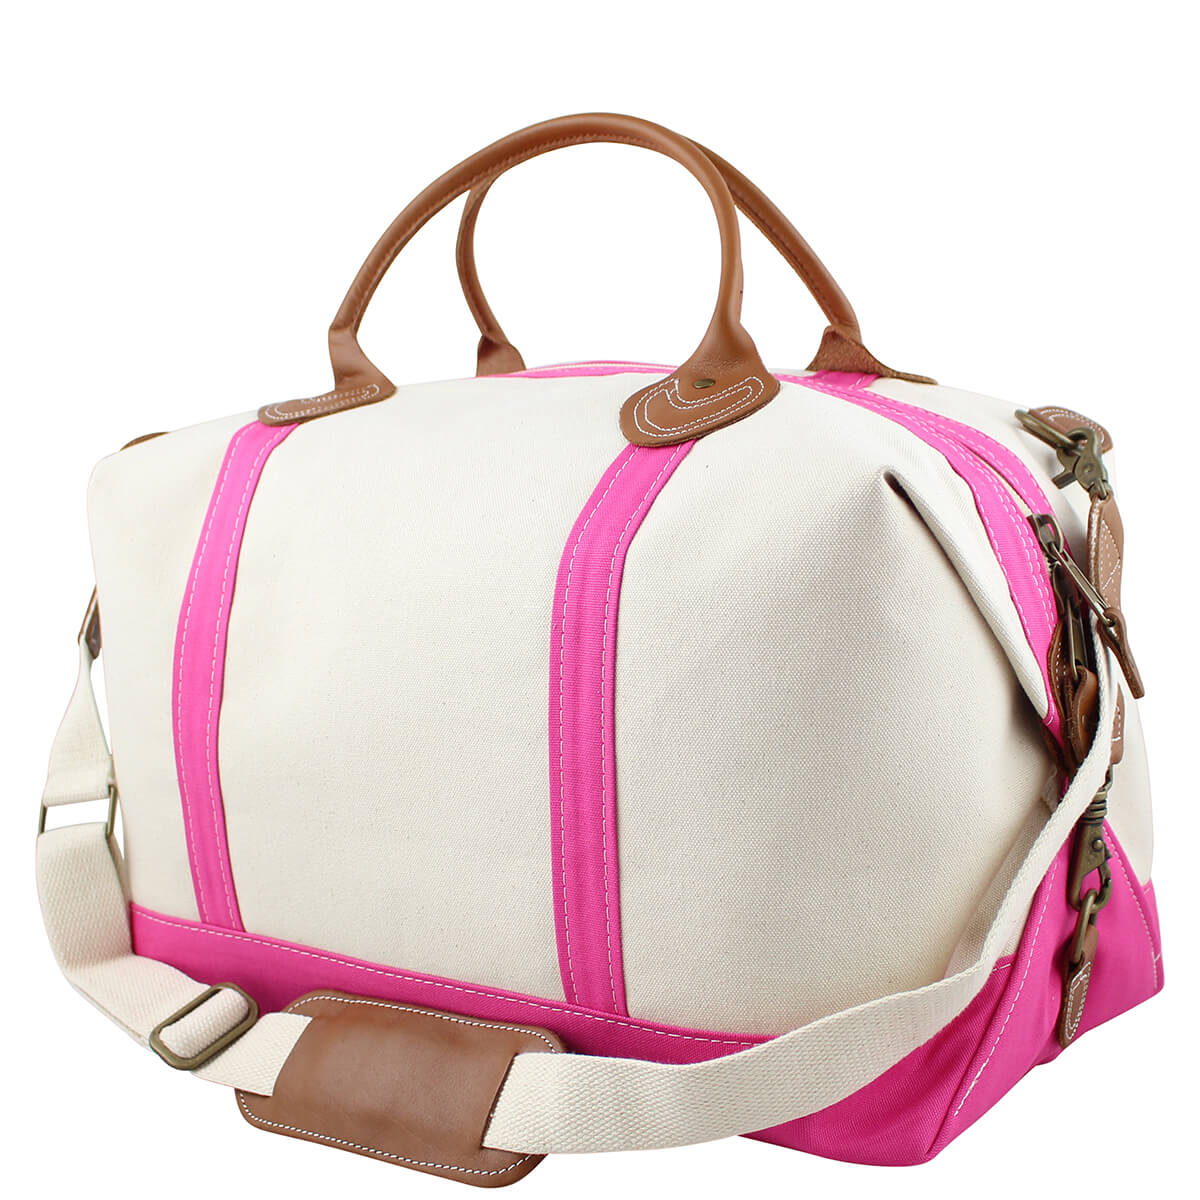 Personalized Weekender Travel Bag Pink